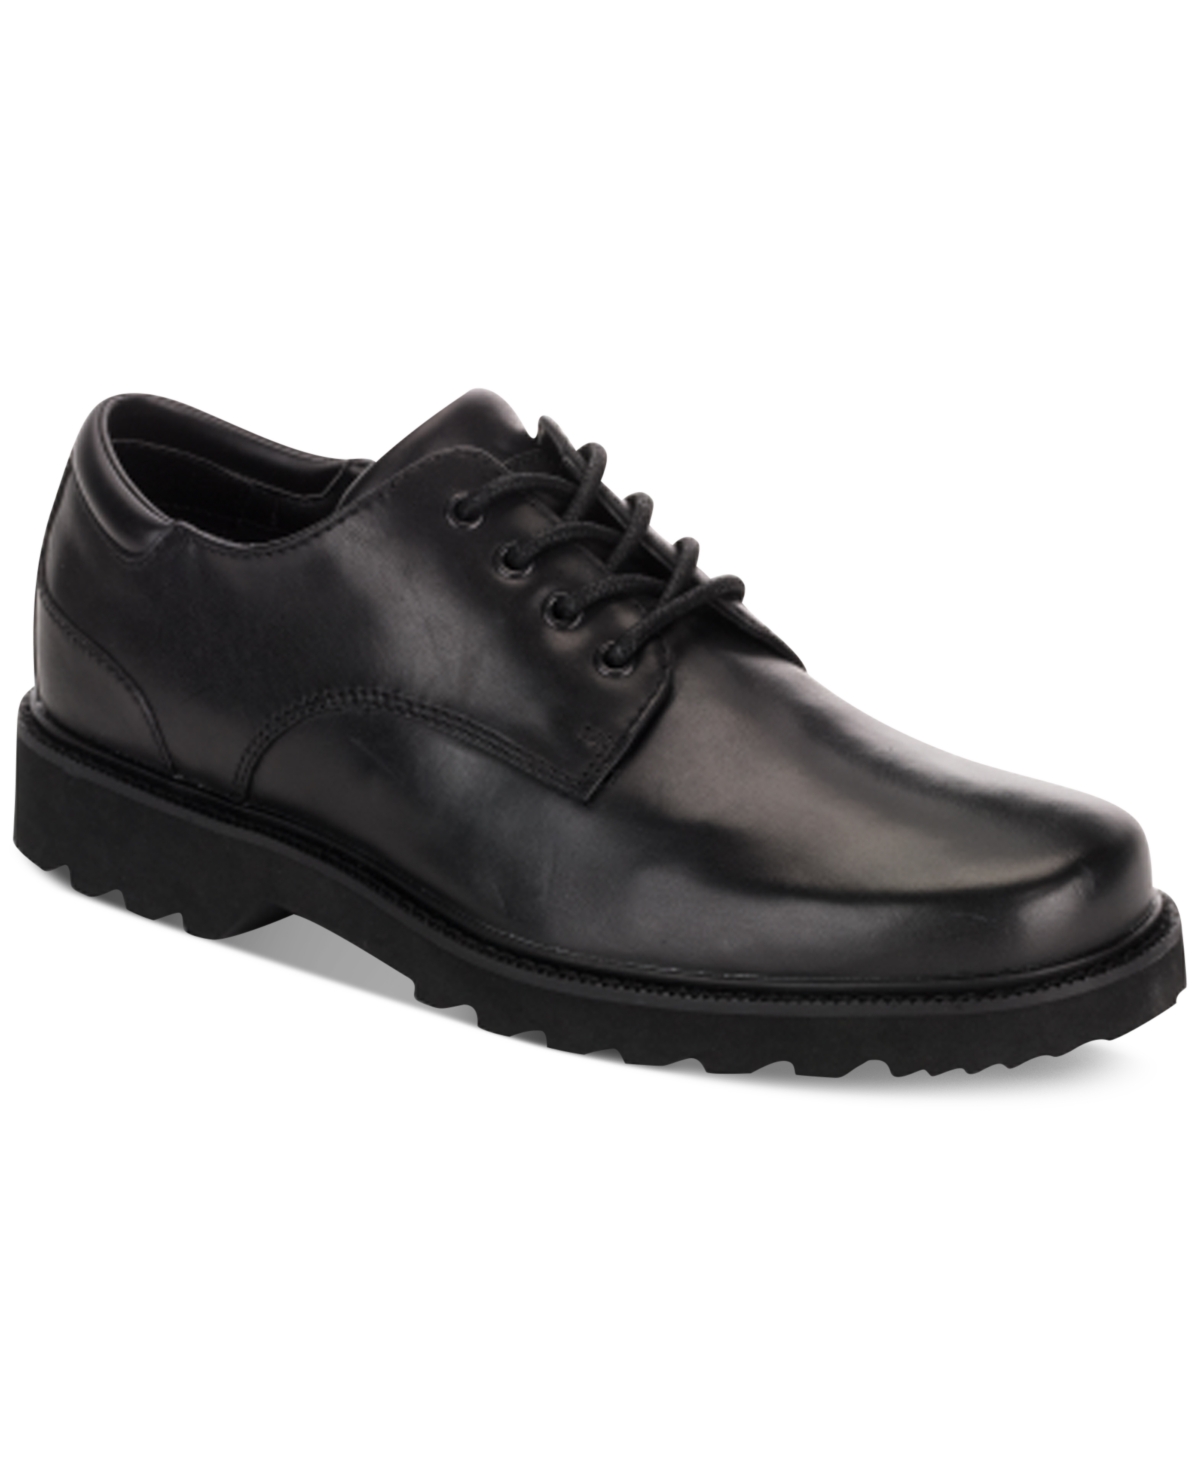 UPC 886412001107 product image for Men's Northfield Water-Resistance Shoes Men's Shoes | upcitemdb.com